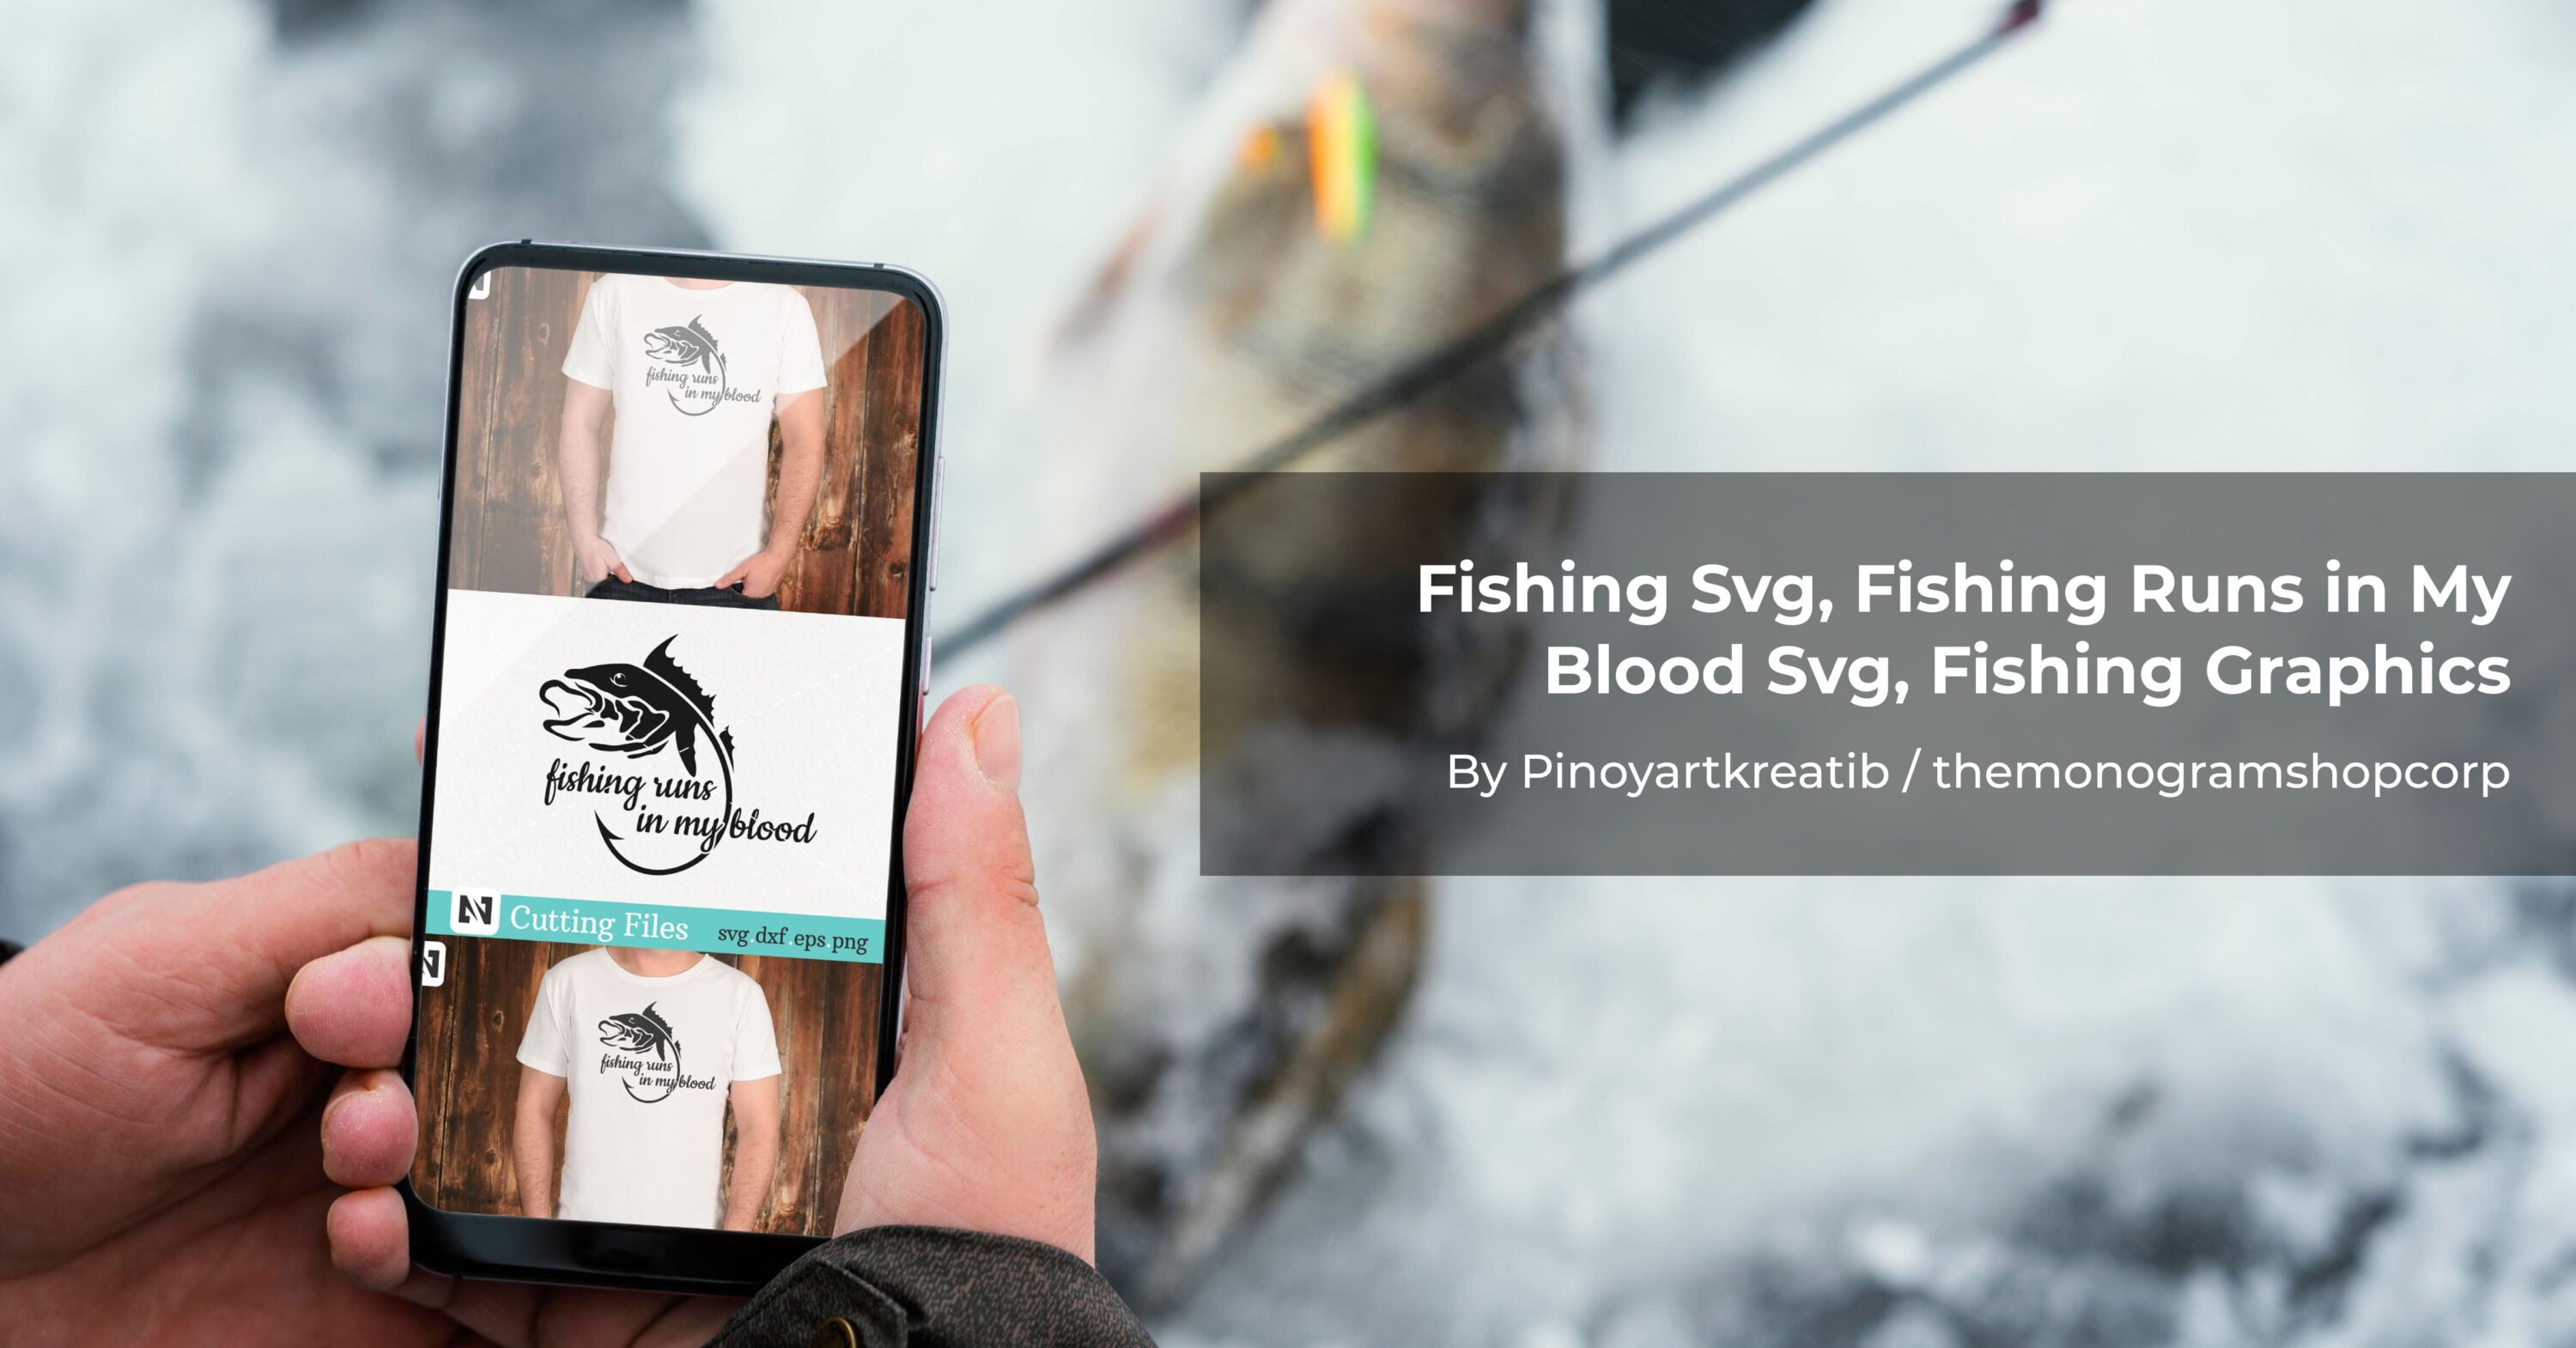 Fishing Svg, Fishing Runs in My Blood Svg, Fishing Graphics - mobile.